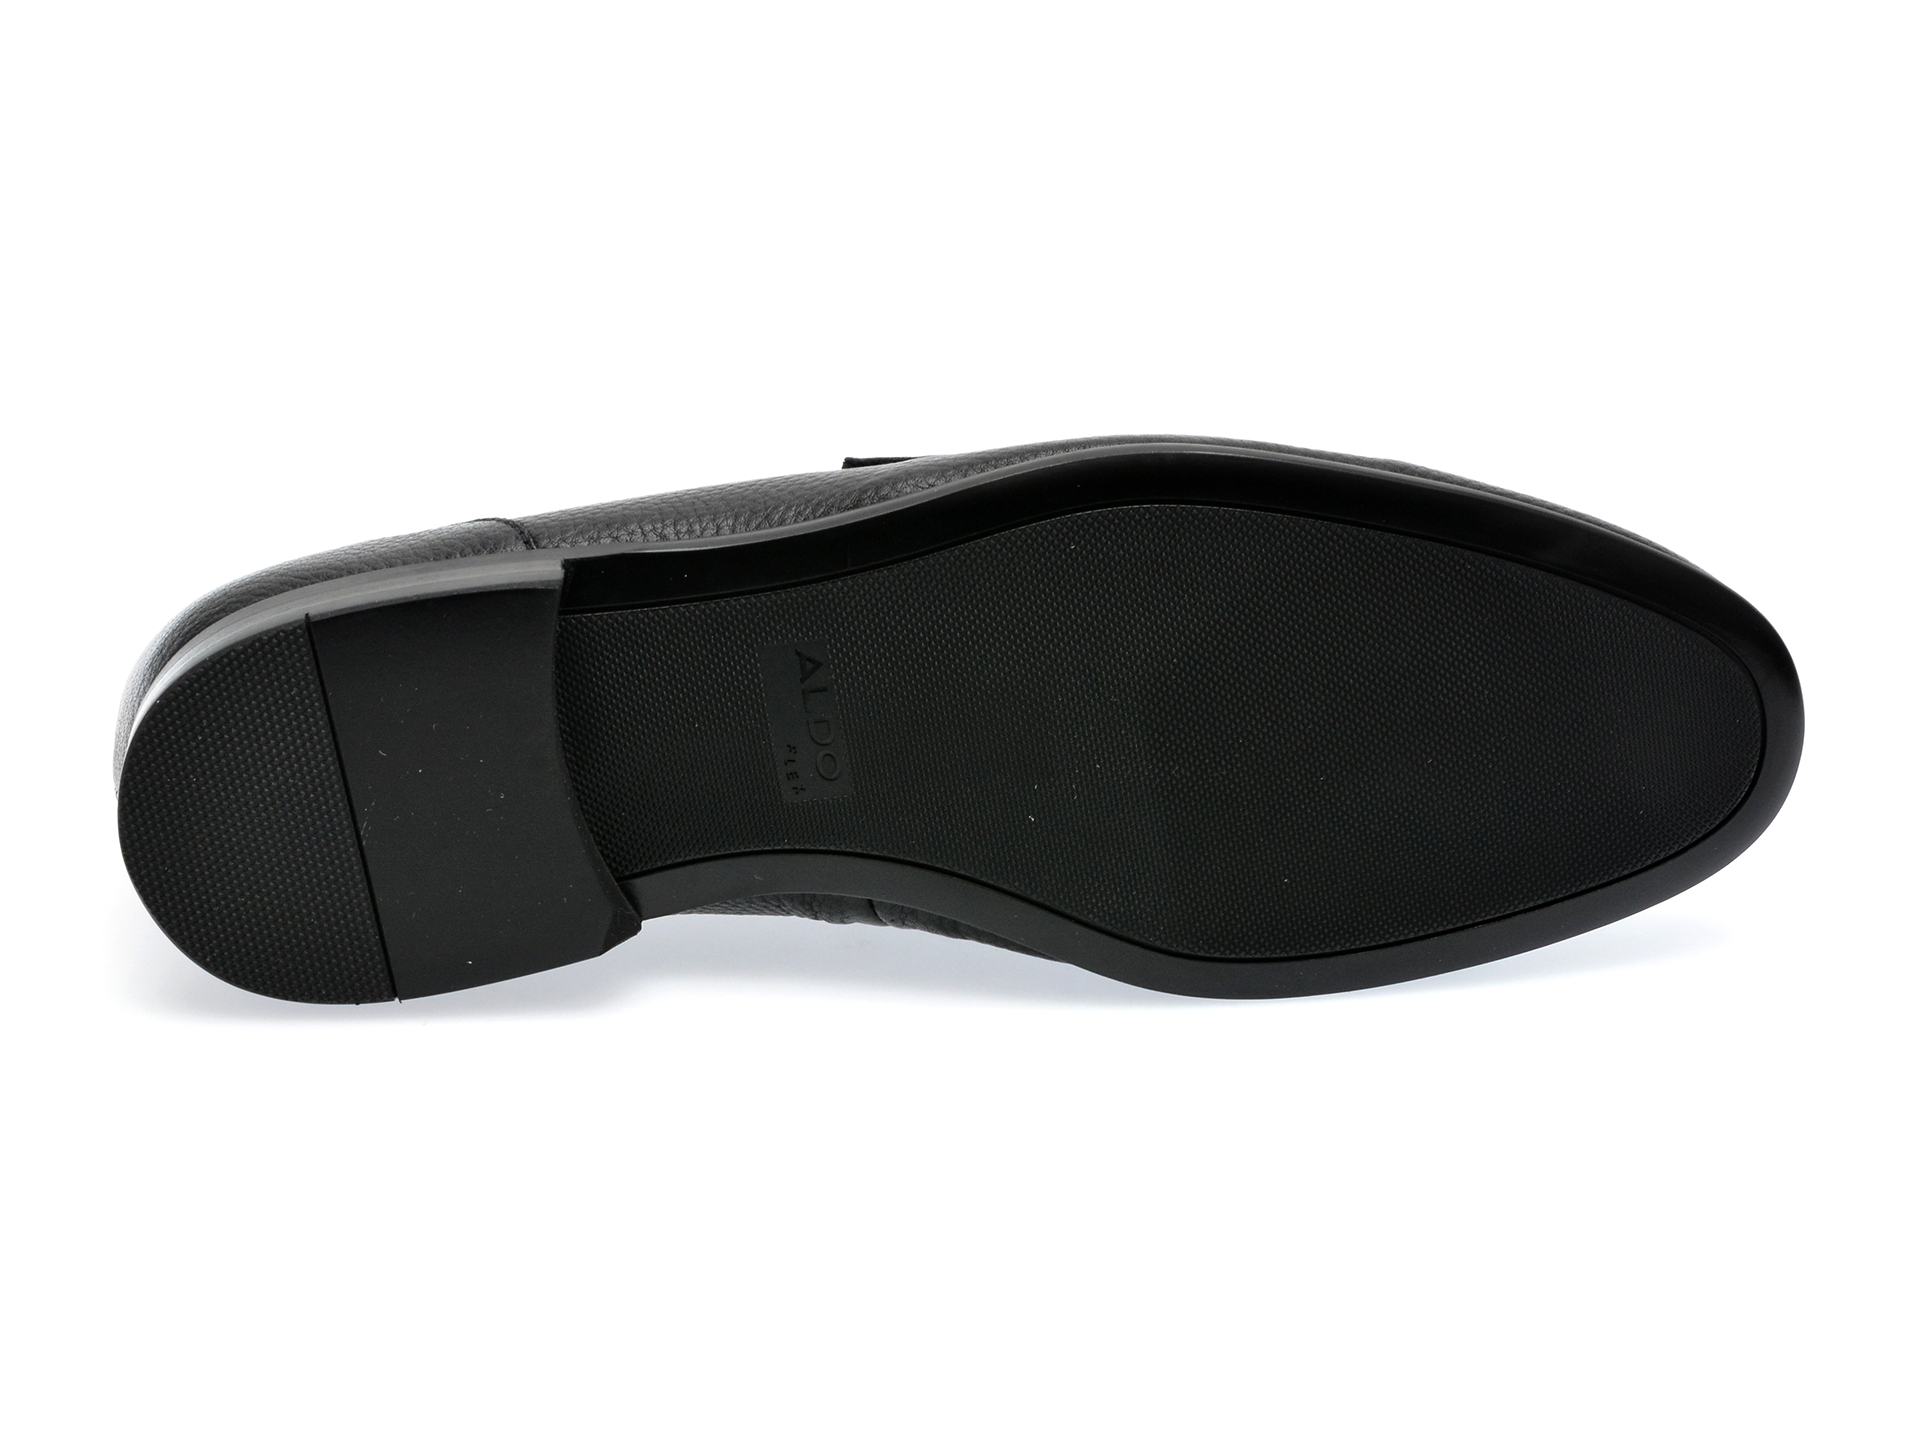 Pantofi ALDO negri, BAINVILLE001, din piele naturala